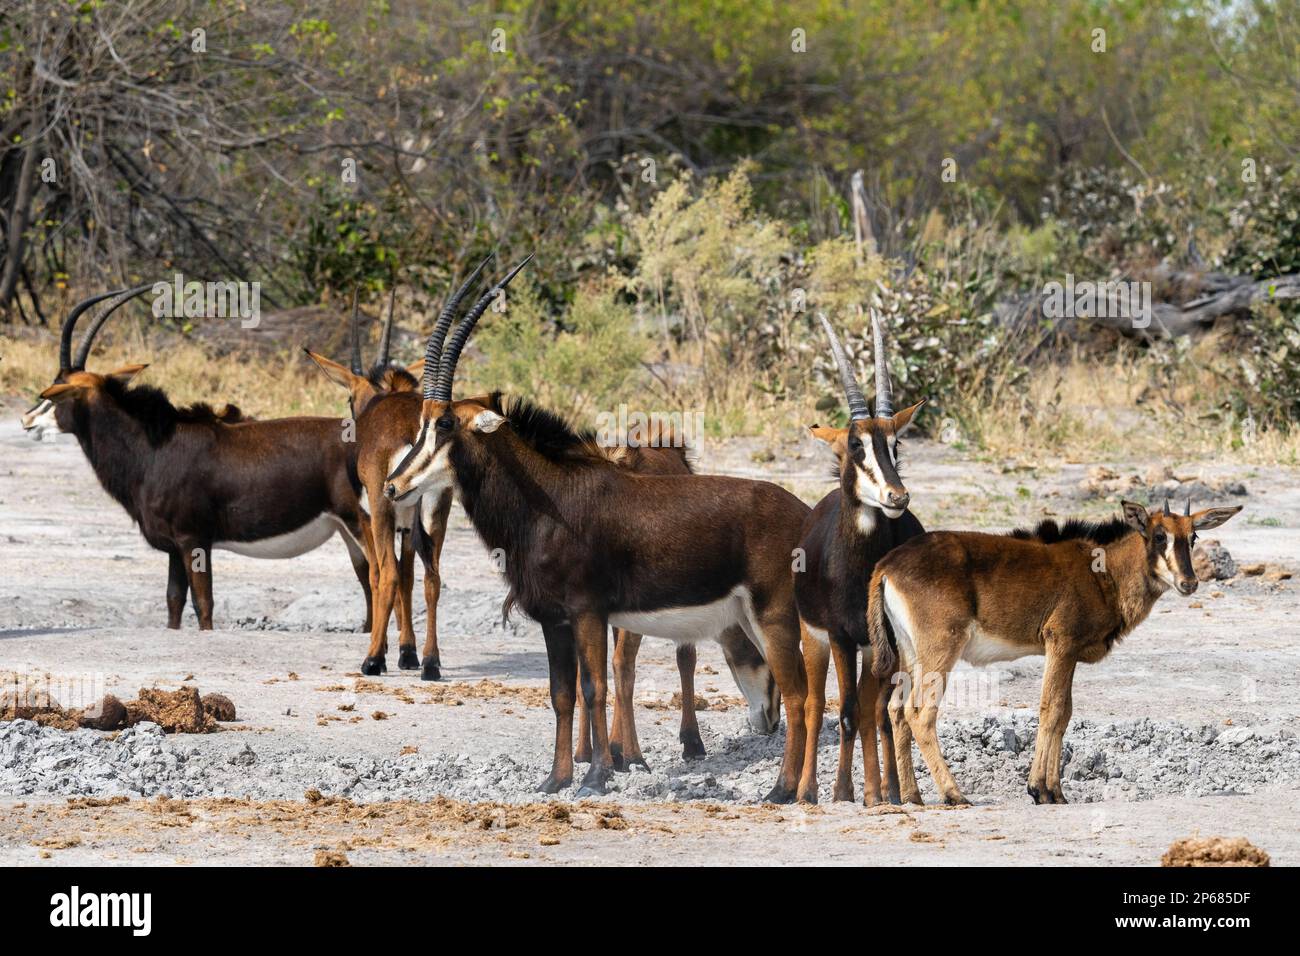 Sable antelopes (Hippotragus niger), Khwai Concession, Okavango Delta, Botswana, Africa Stock Photo